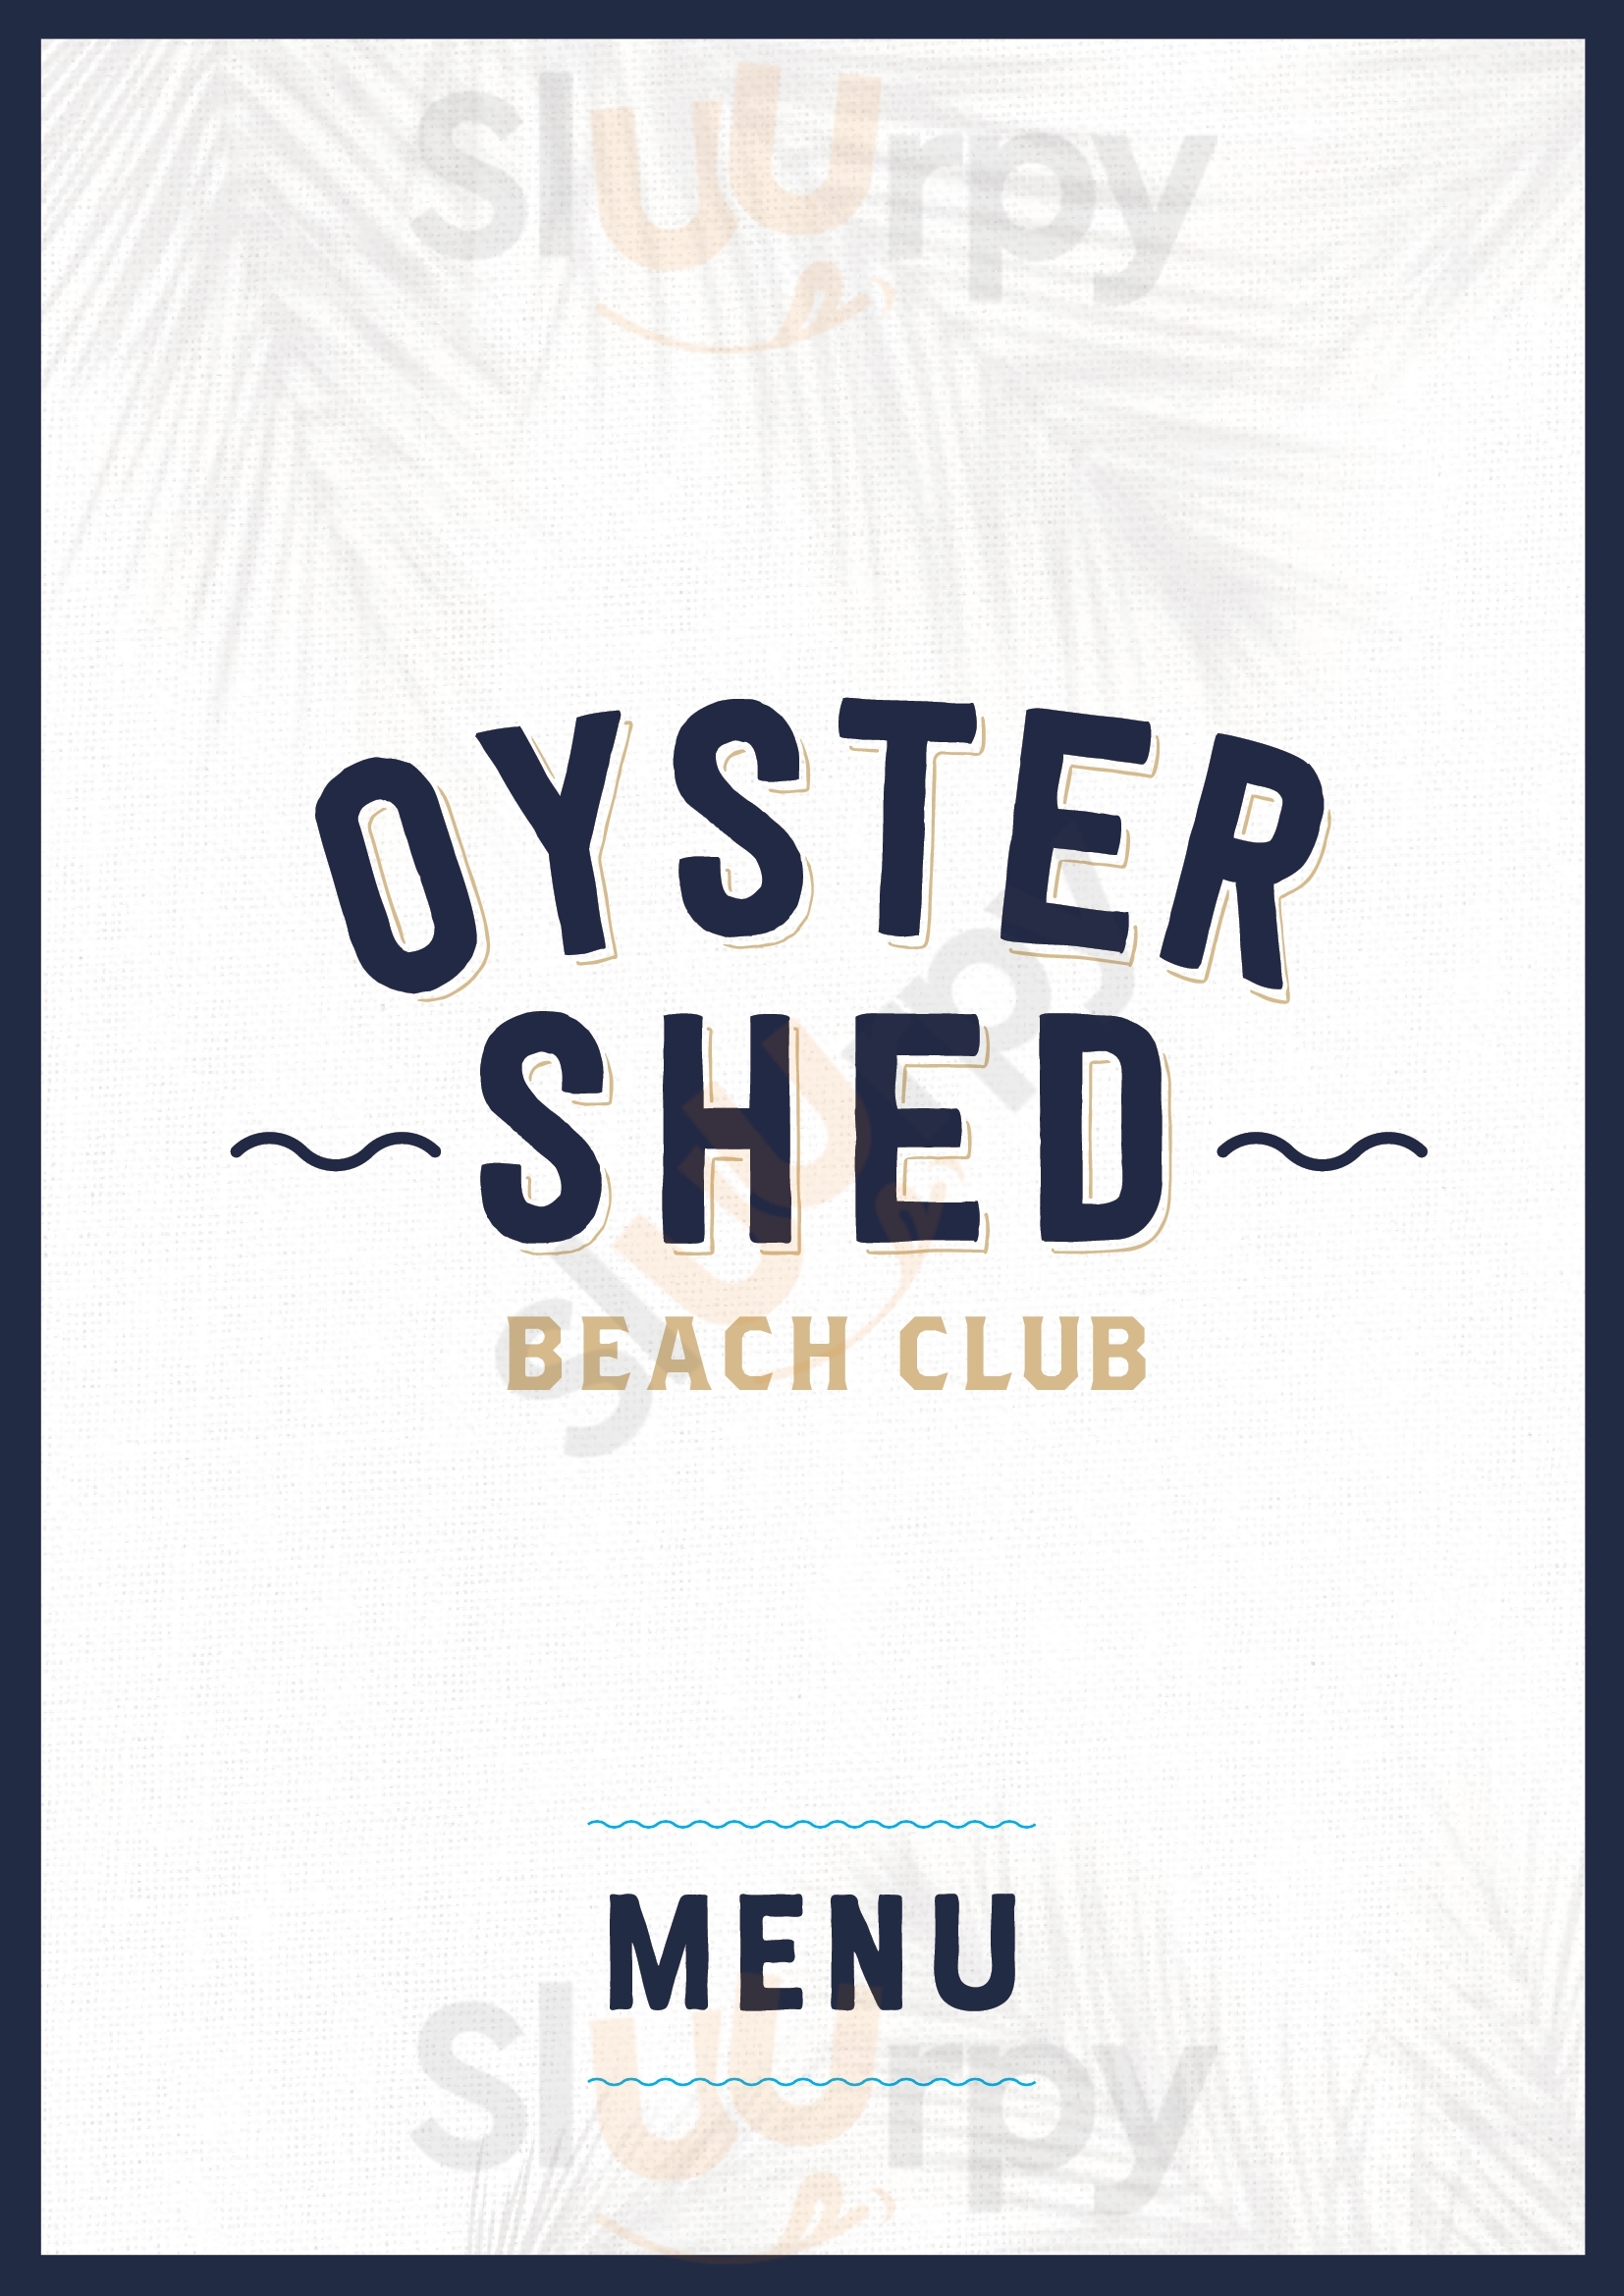 The Oyster Shed Fish & Chip Shop Bribie Island Menu - 1